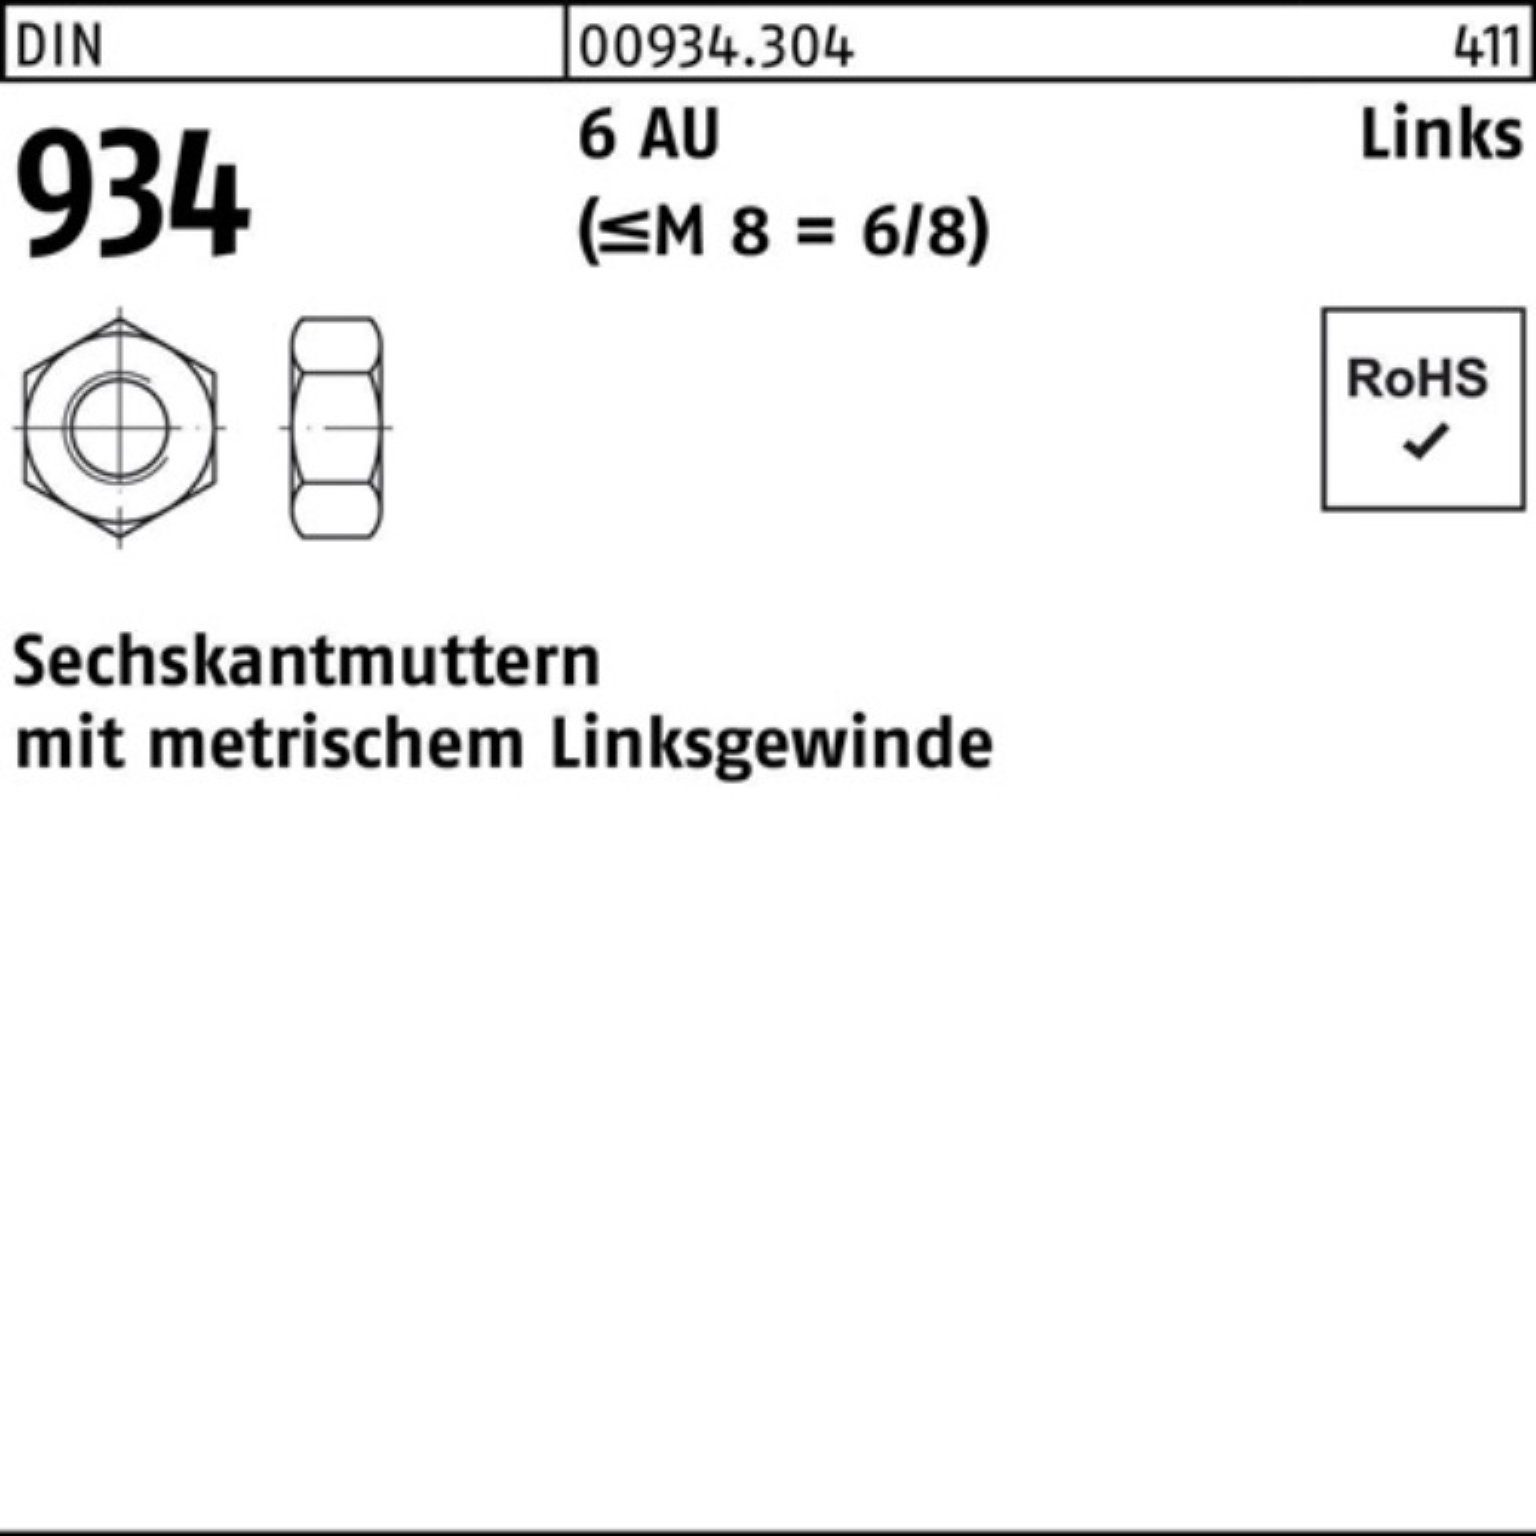 M42 links -LH Reyher Pack Sechskantmutter DIN Automatenstahl 100er 934 St 1 6 Muttern